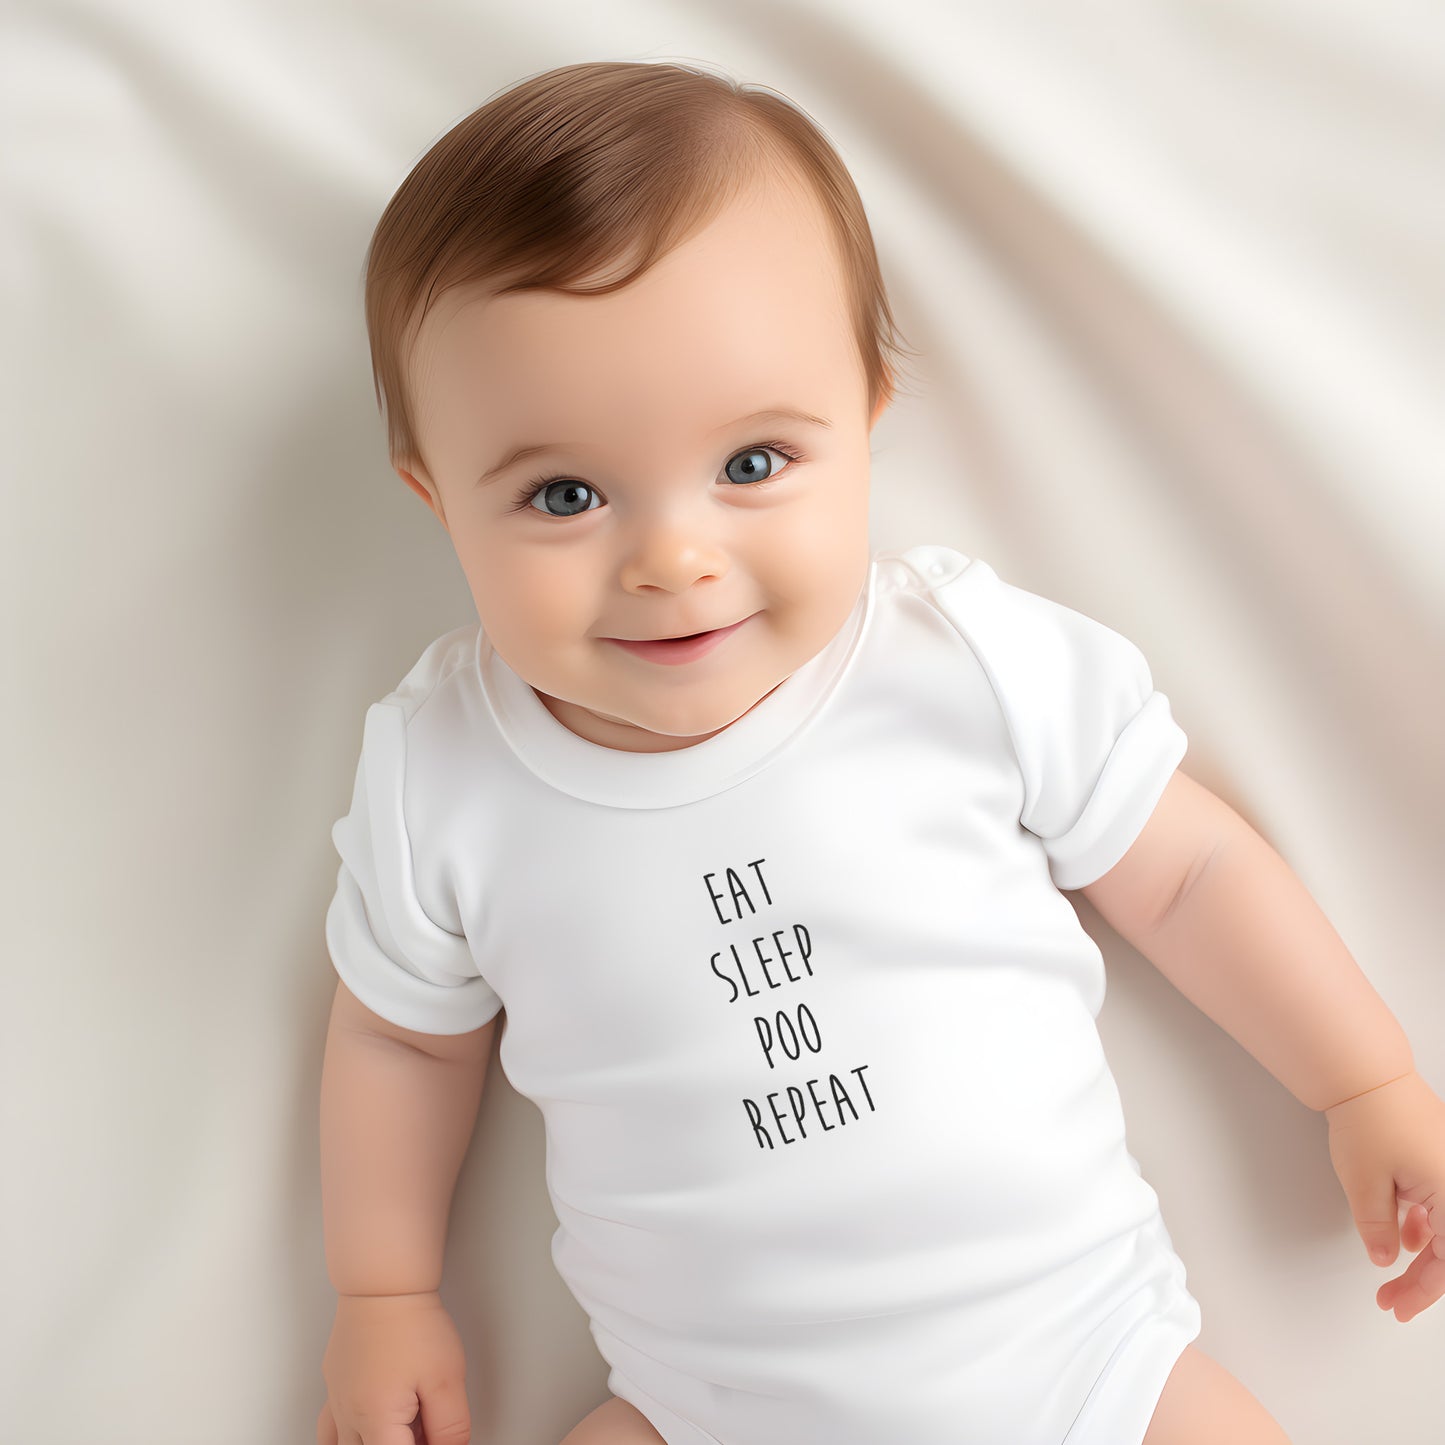 Eat Sleep Poo Repeat -  Baby Vest